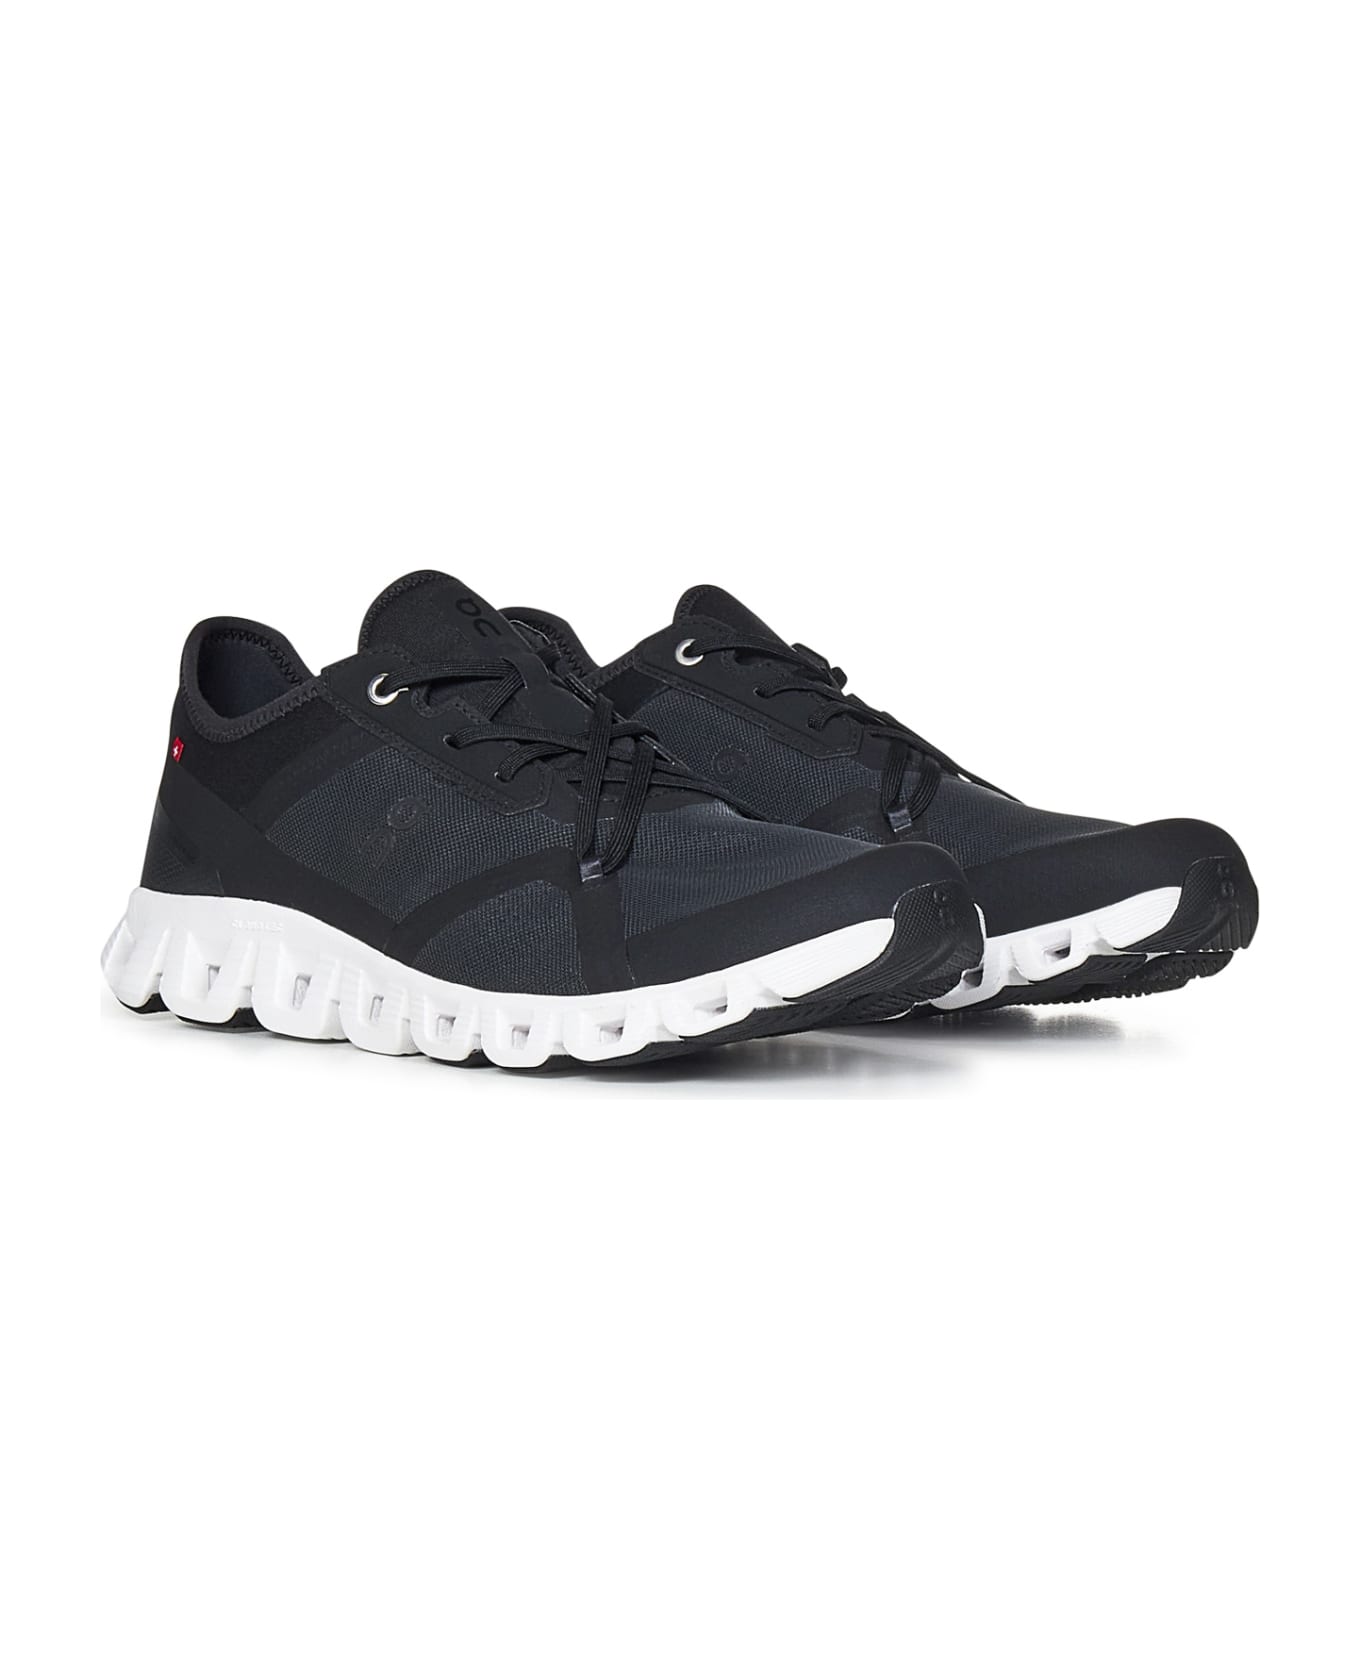 ON Running Cloud X 3 Ad Sneakers - Black